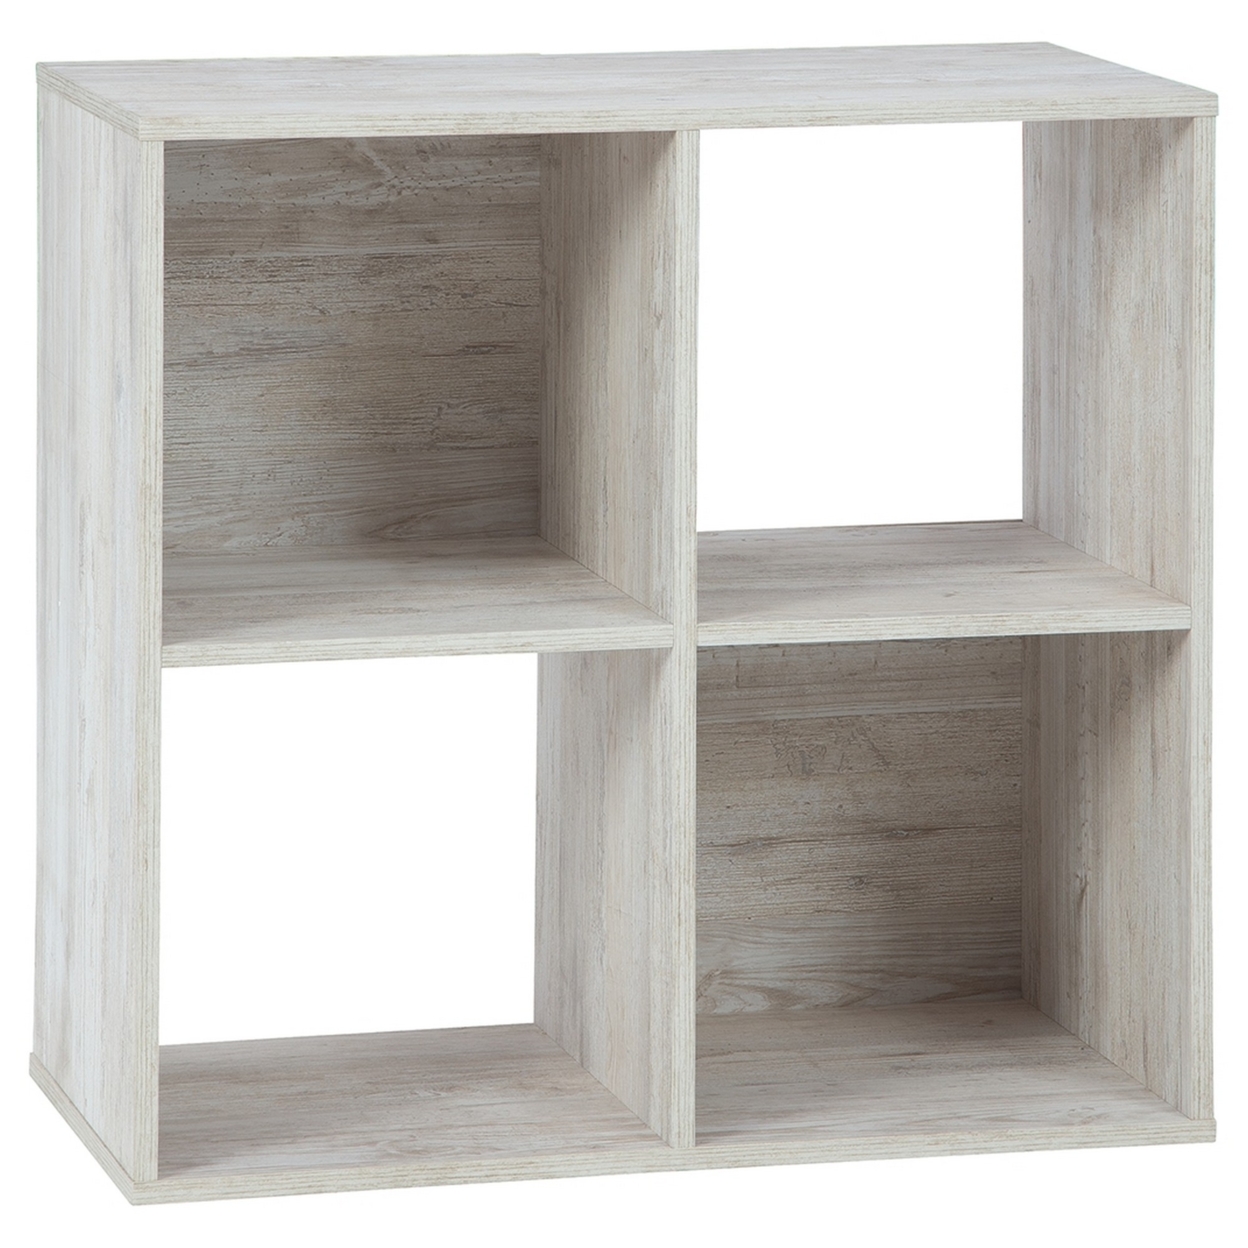 4 Cube Wooden Organizer With Grain Details, Washed White- Saltoro Sherpi